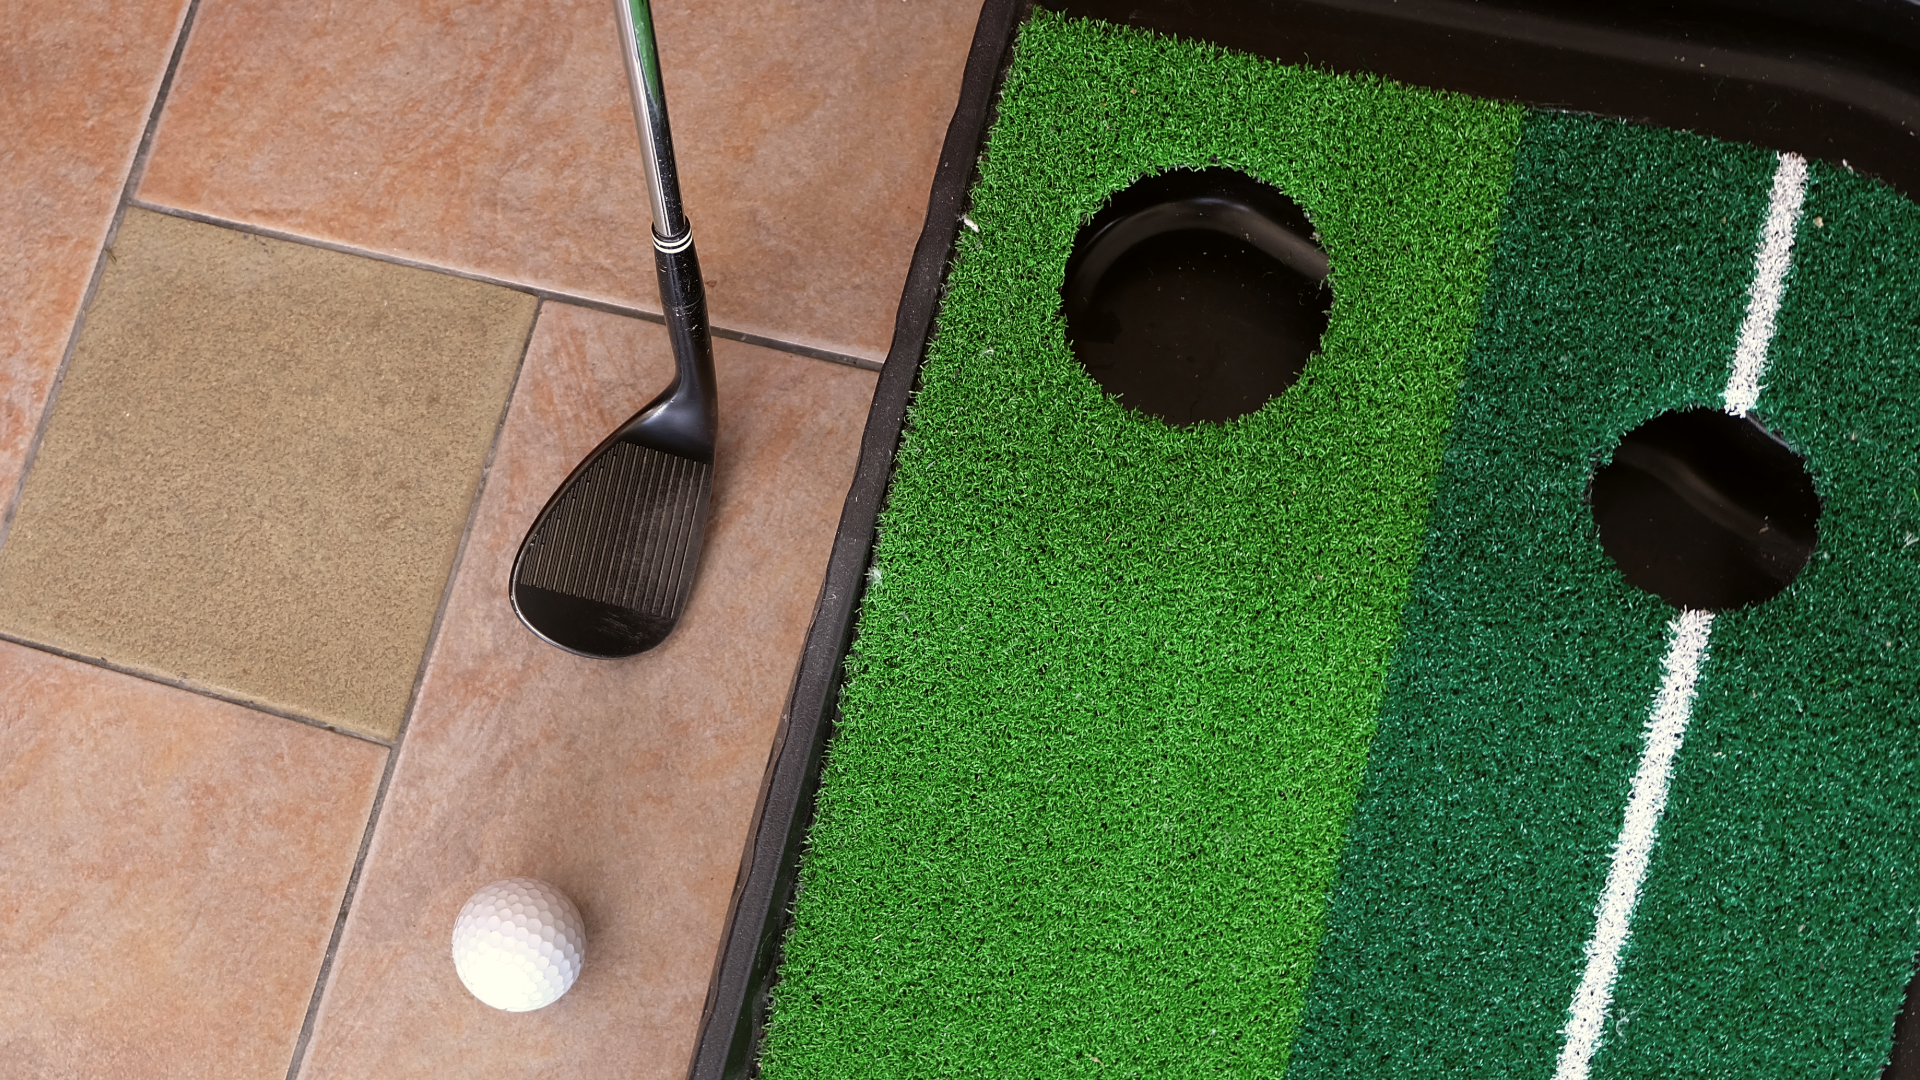 Golf training indoors